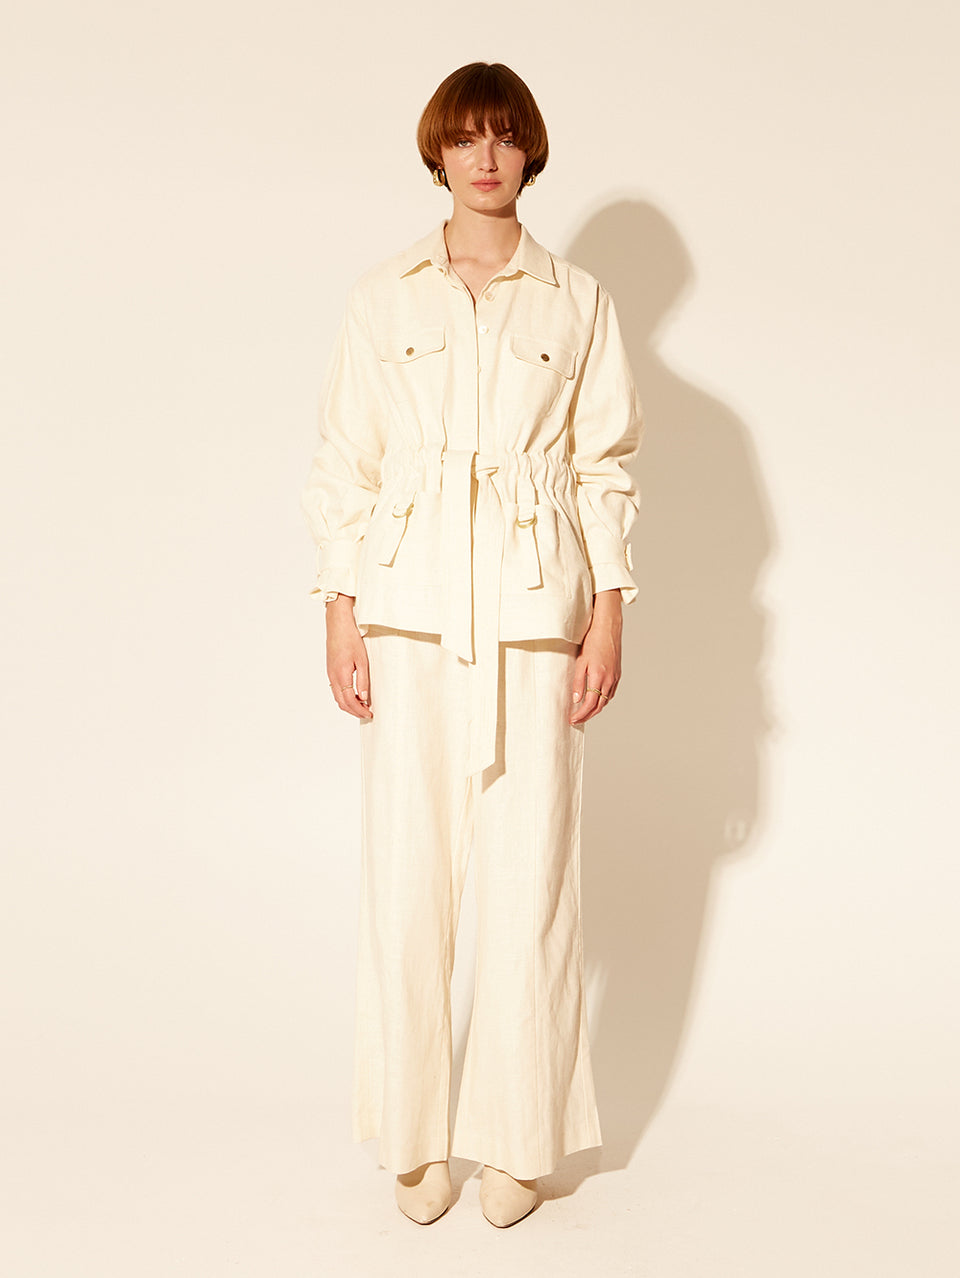 Oaklee Jacket Cream KIVARI | Model wears cream jacket